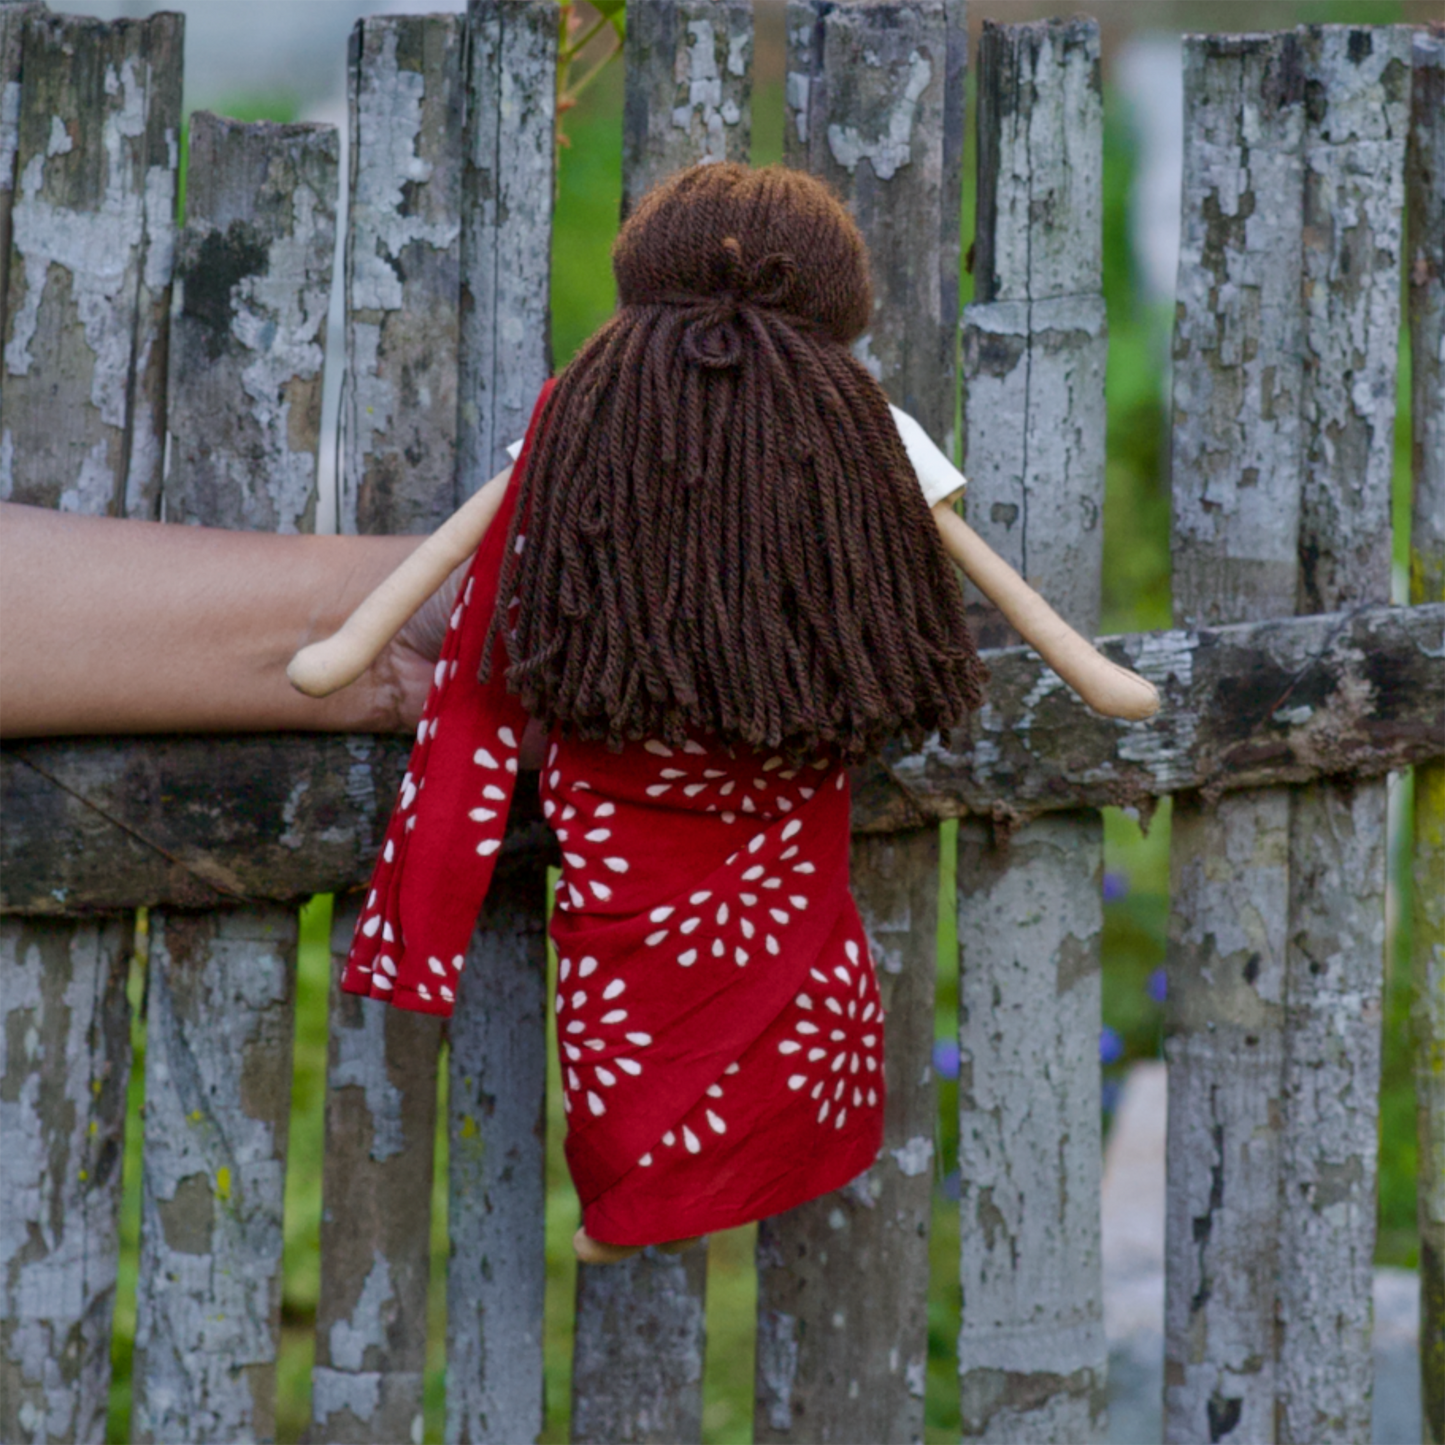 The Good Gift Single Doll Hema Cotton Fabric Toy